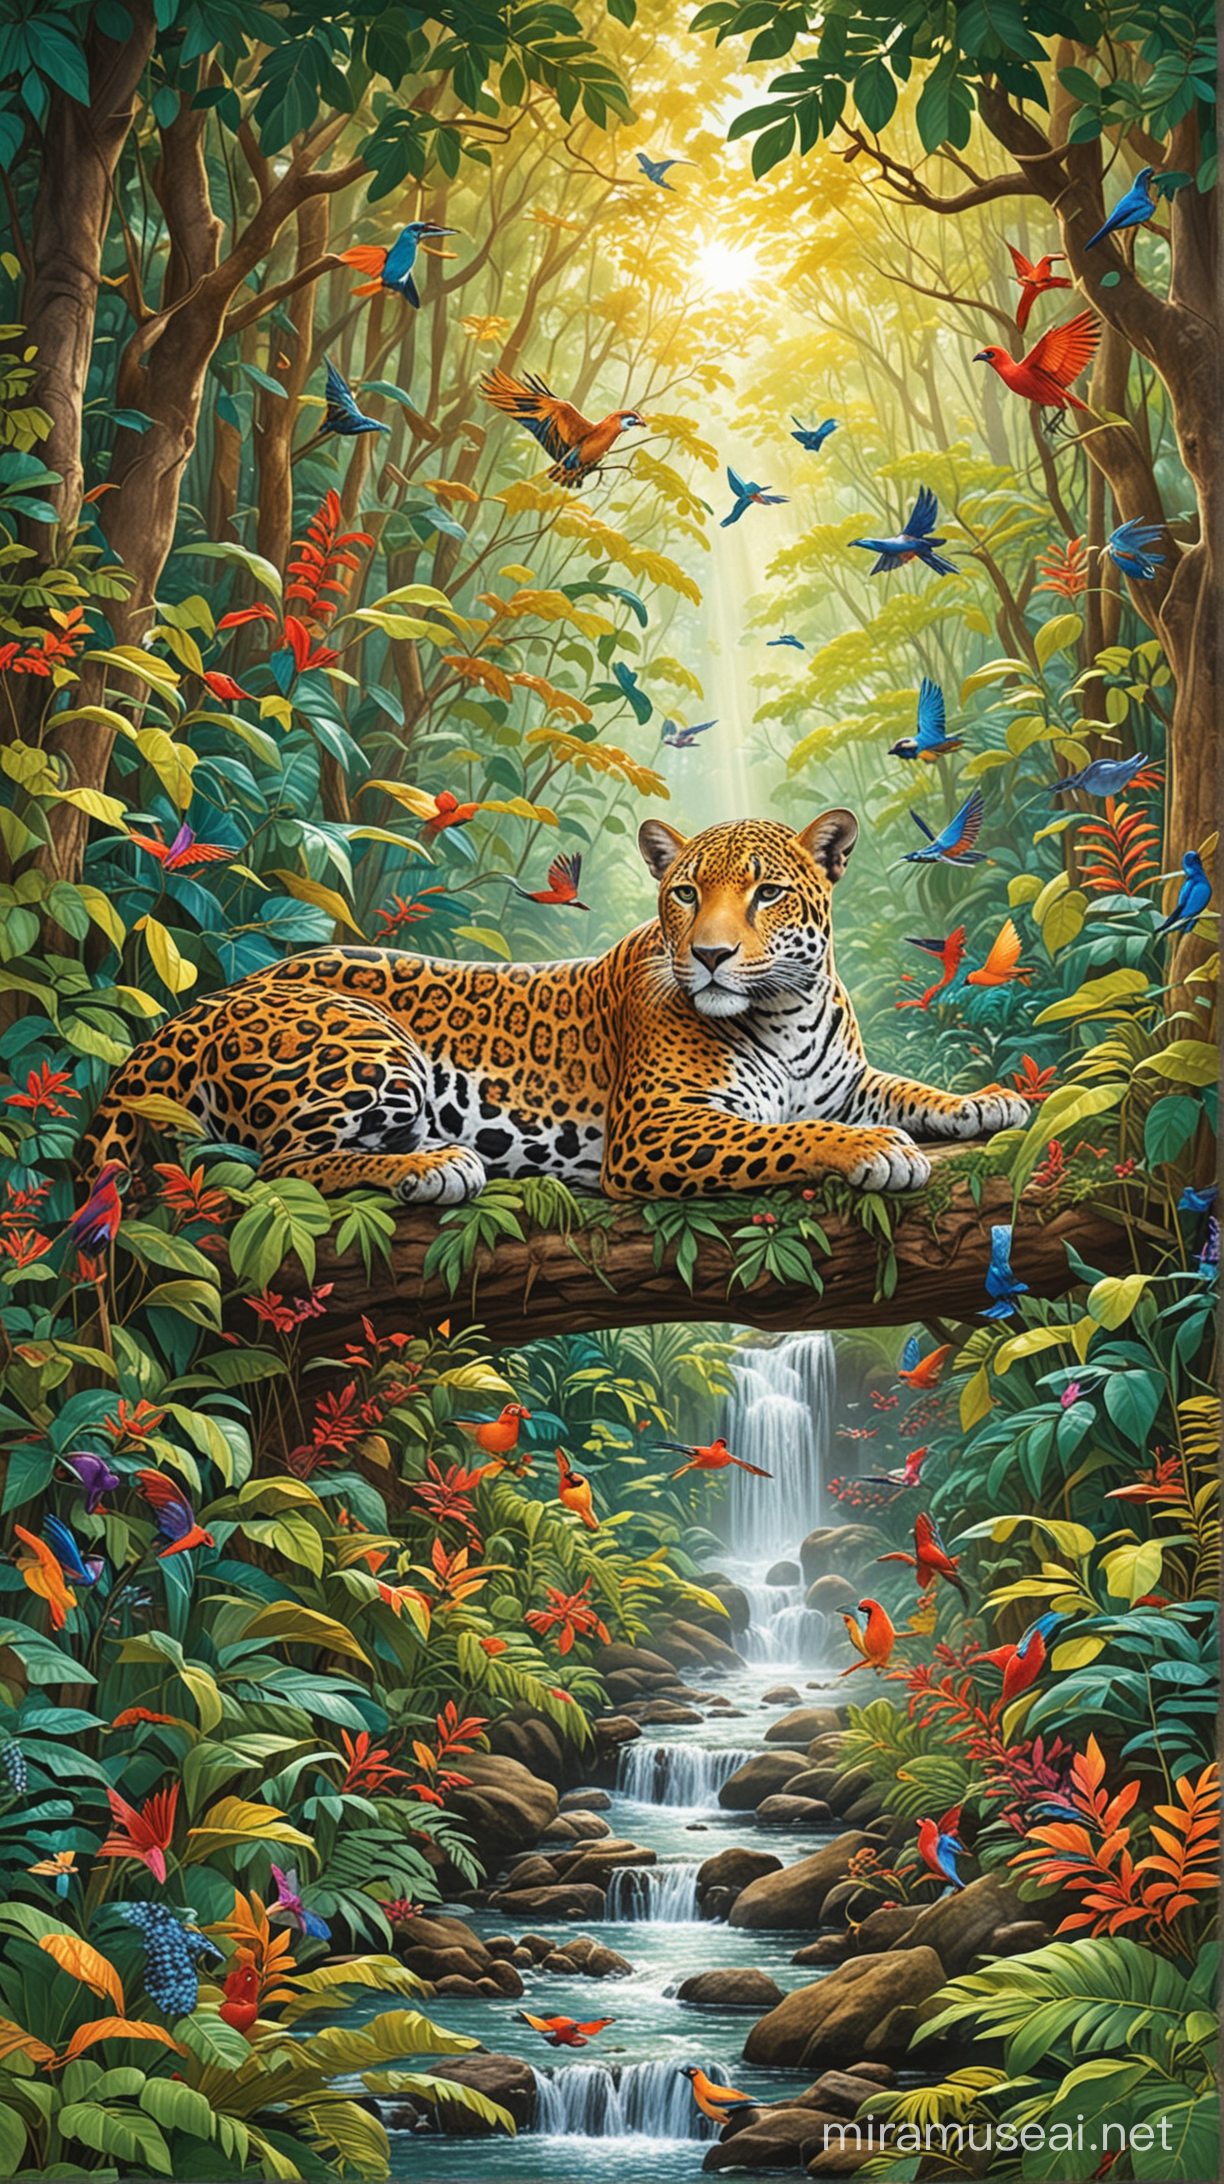 Vibrant Jungle Scene Jaguar and Colorful Birds Amid Lush Foliage and Sunlight